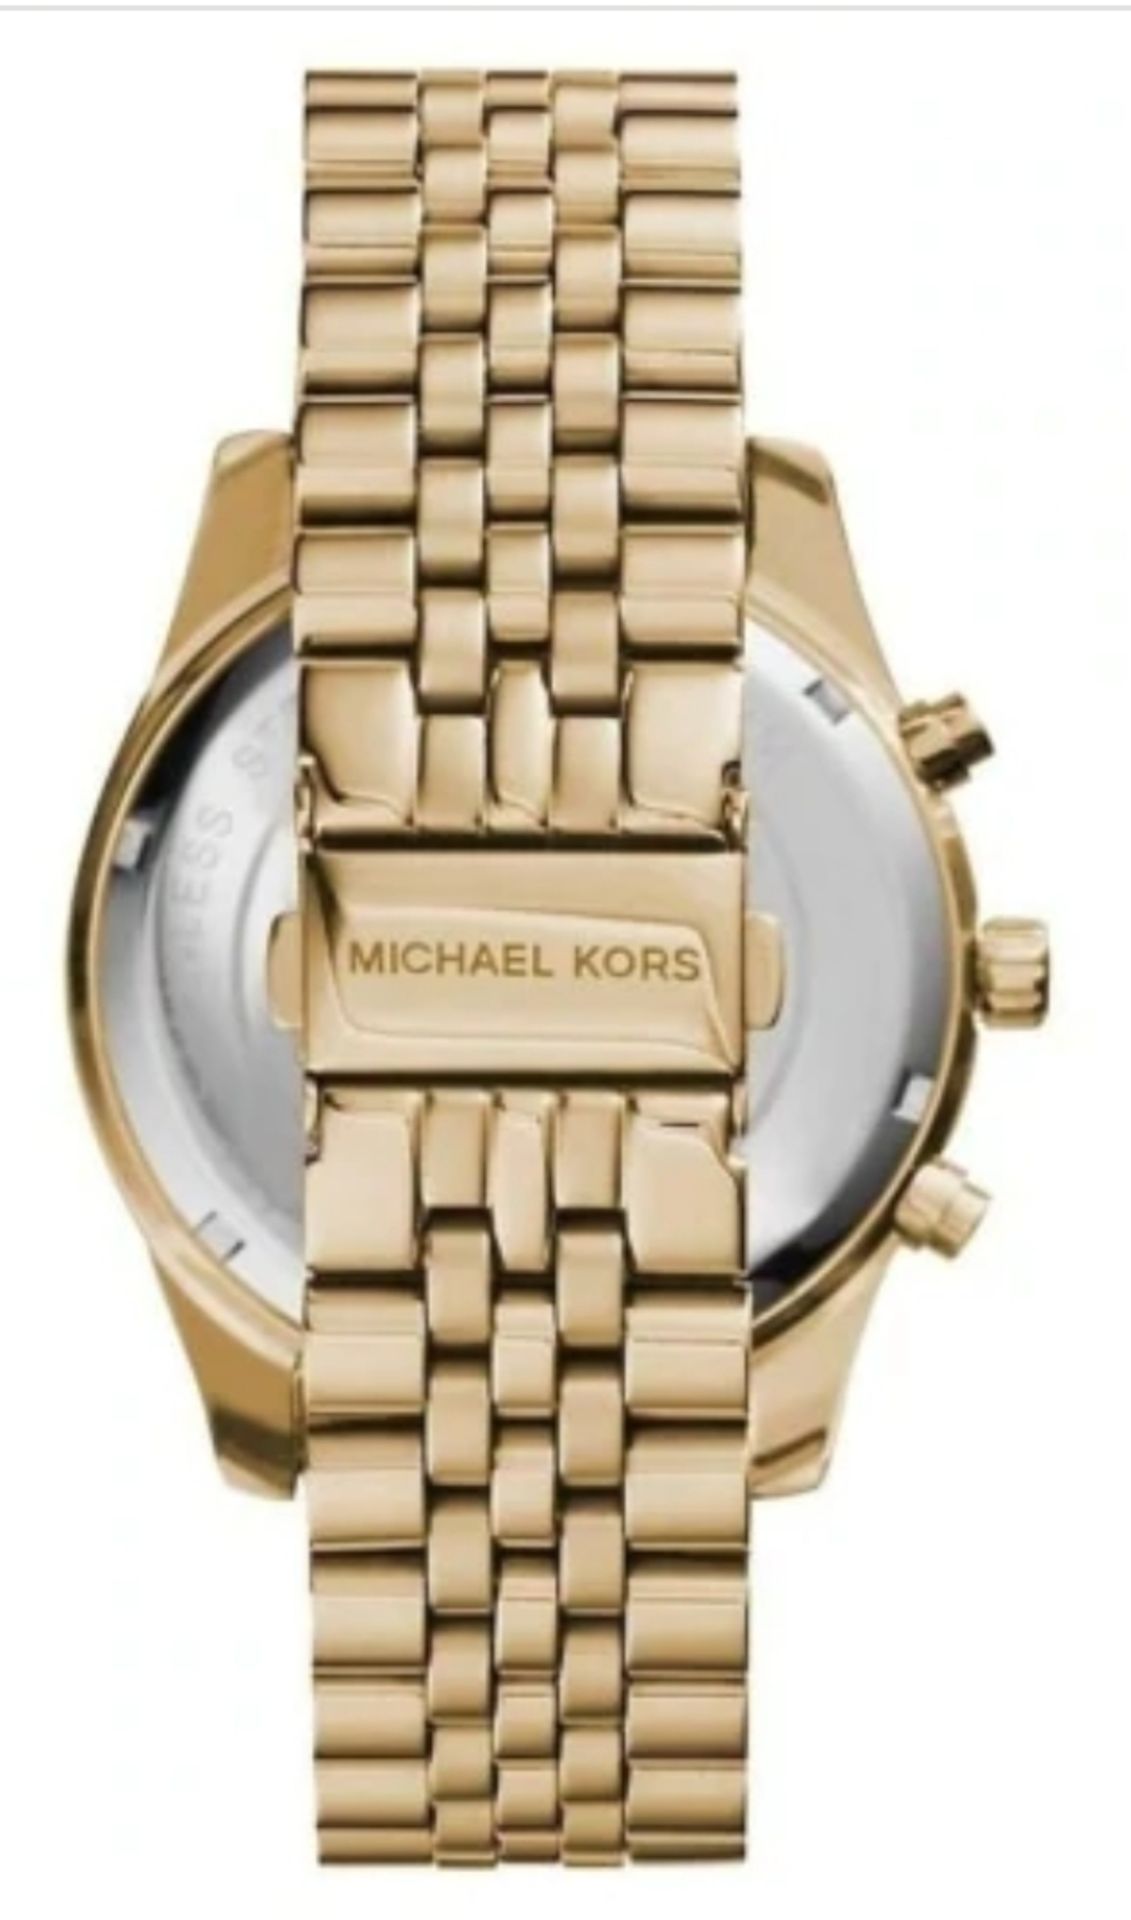 Michael Kors MK8446 Mens Lexington Watch - Image 5 of 8